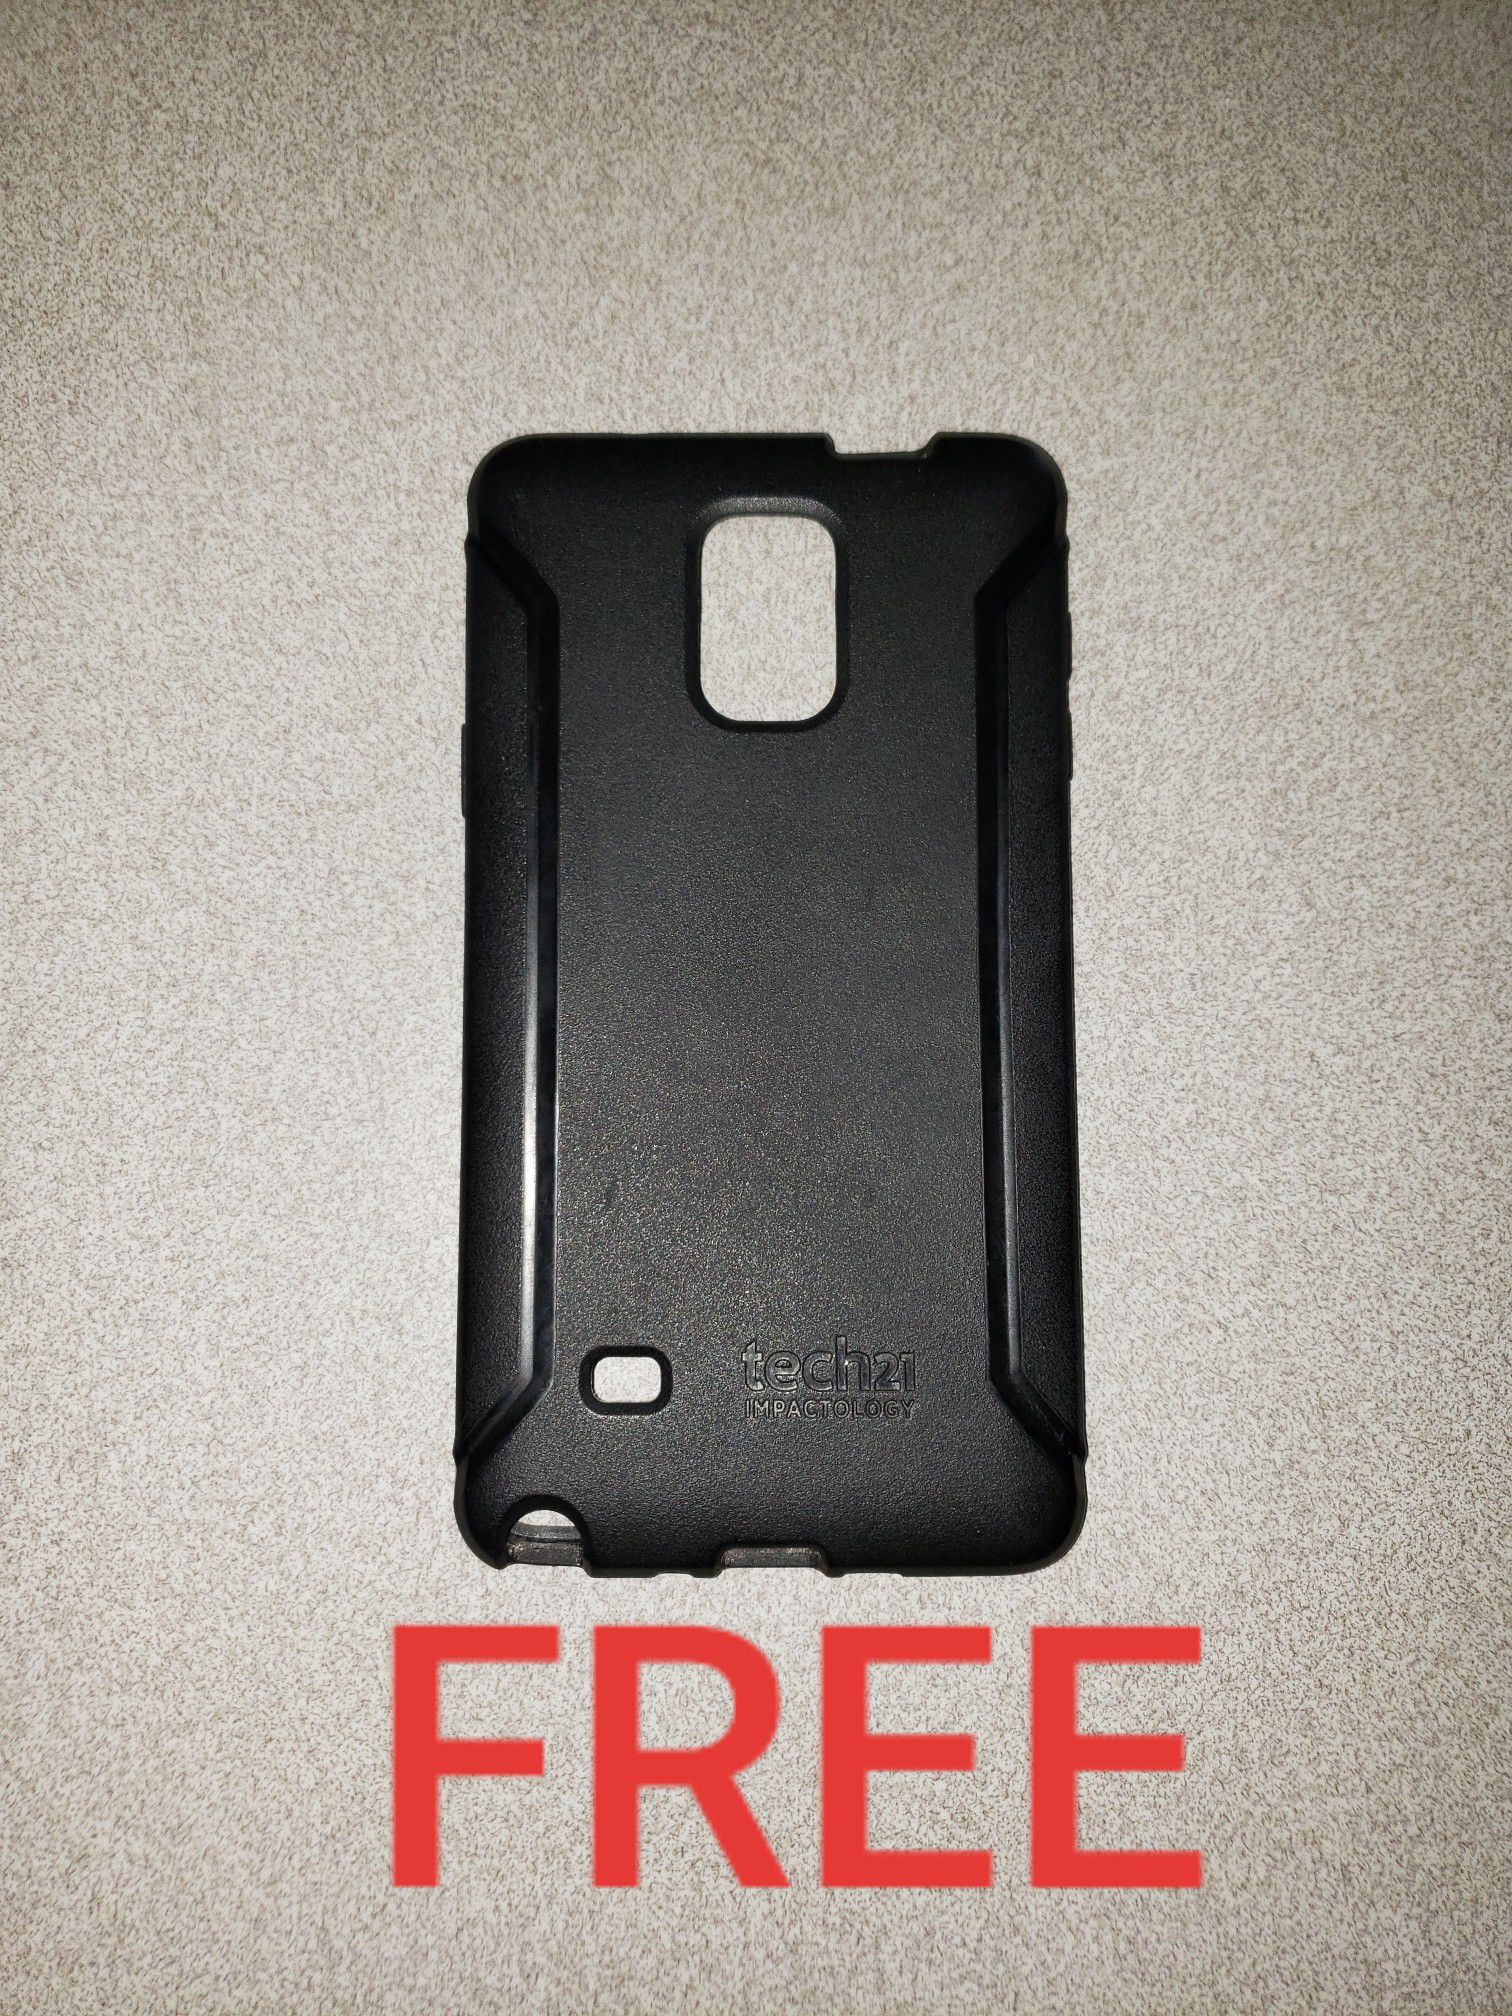 FREE - Galaxy Note 4 Case